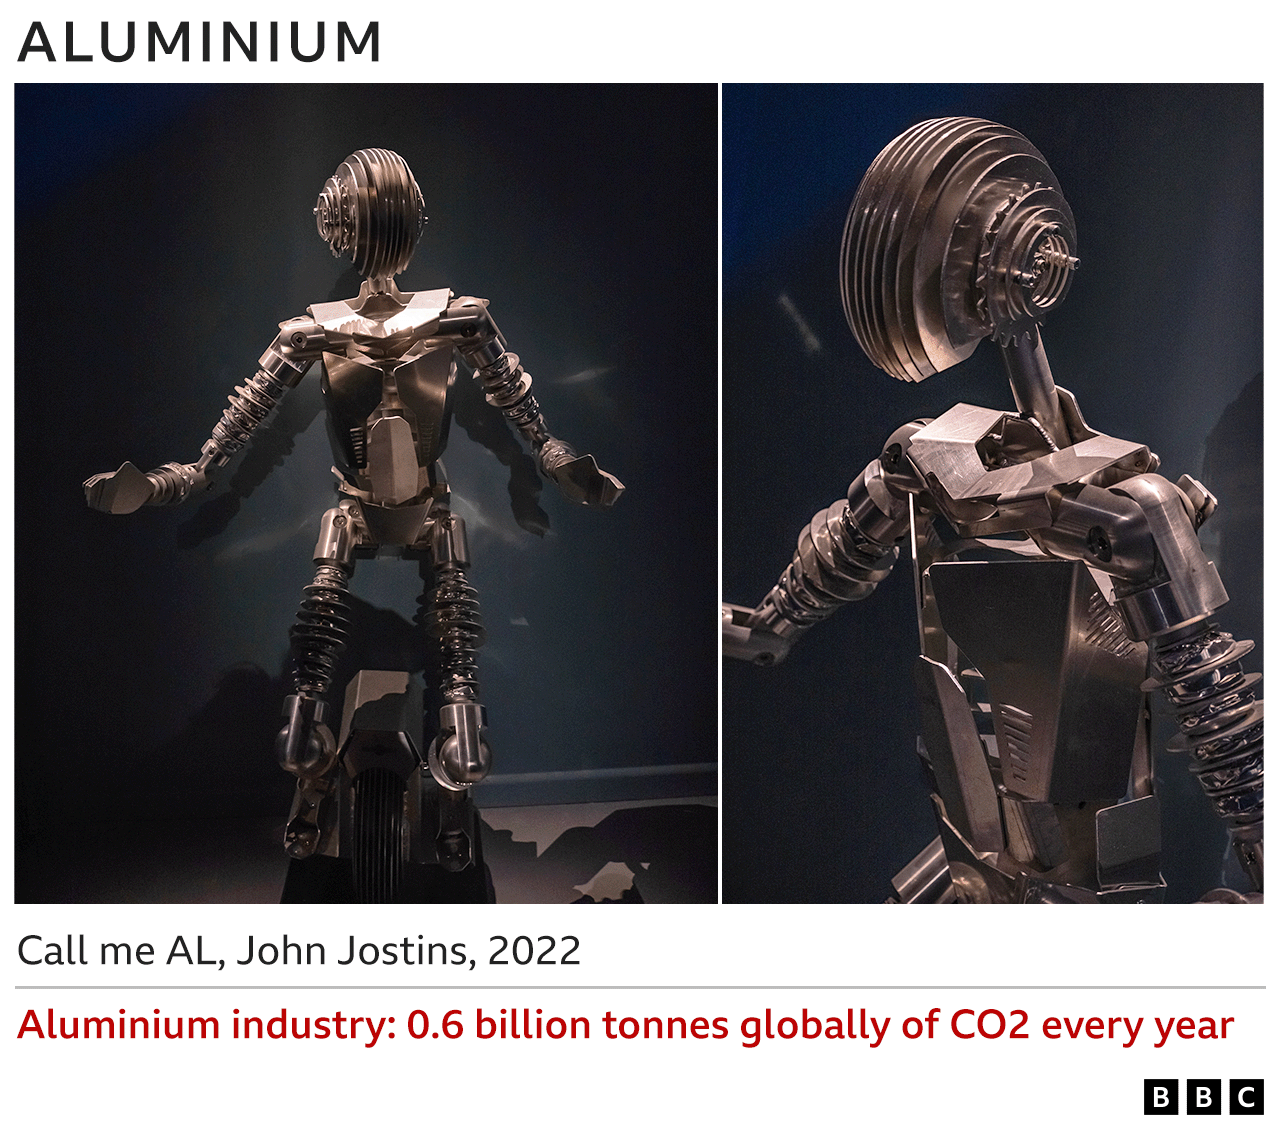 Images of aluminium sculpture - Call me AL, John Jostins, 2022 - Aluminium industry 0.6bn tonnes globally of CO2 every year